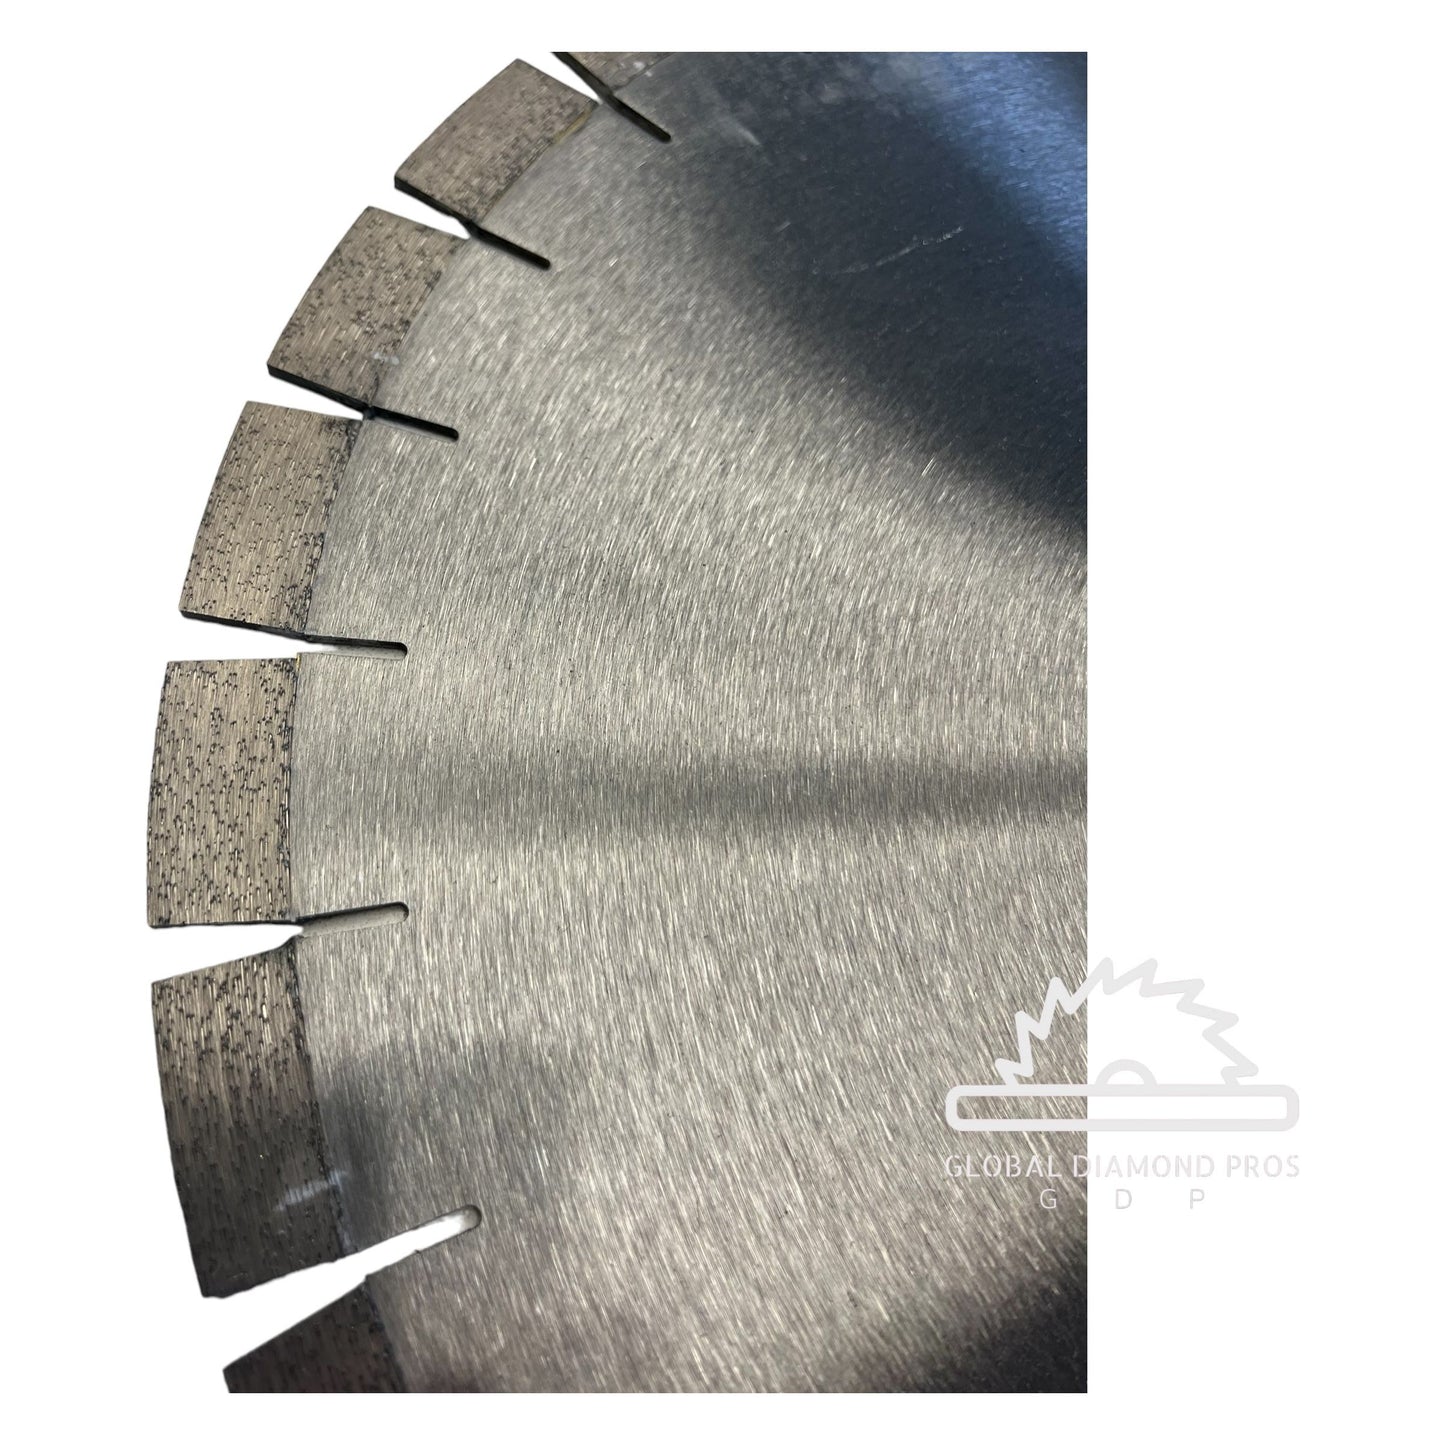 Bridge Saw Blades -  16” Silent Core Diamond Blade for Granite & Quartz Blade